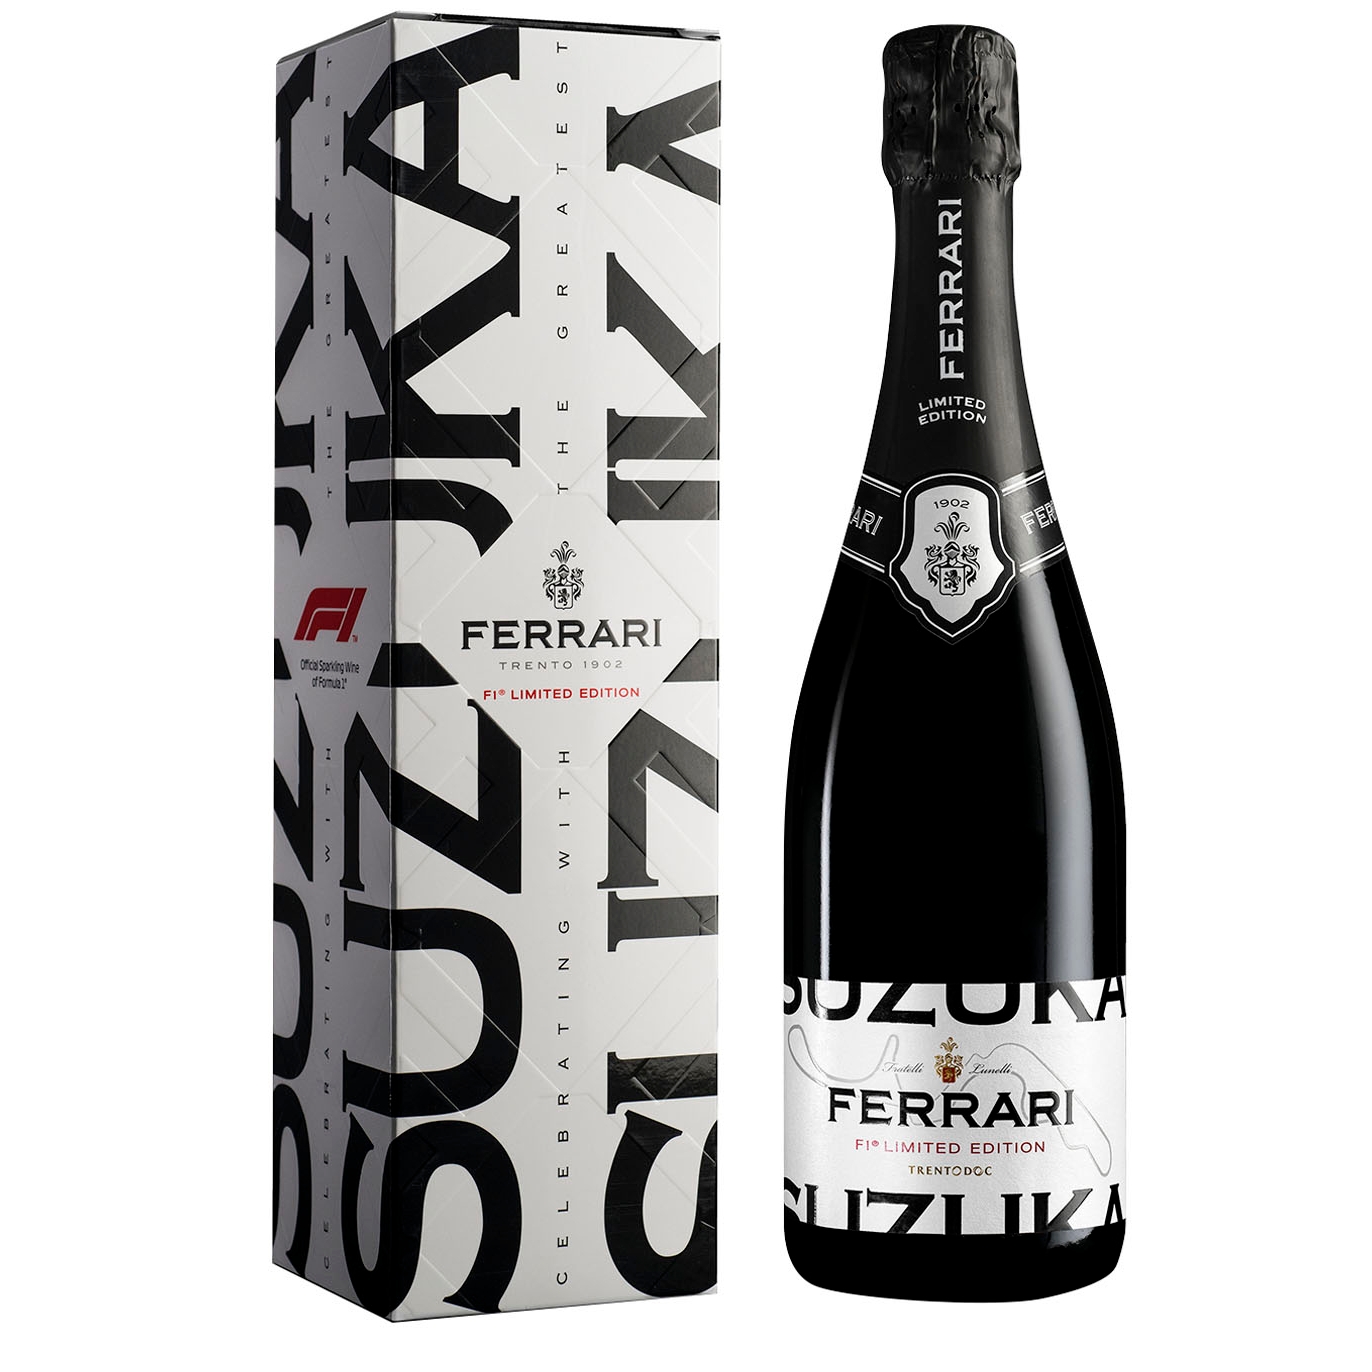 Ferrari Ferrari F1 Suzuka Limited Edition Trentodoc Sparkling Wine NV